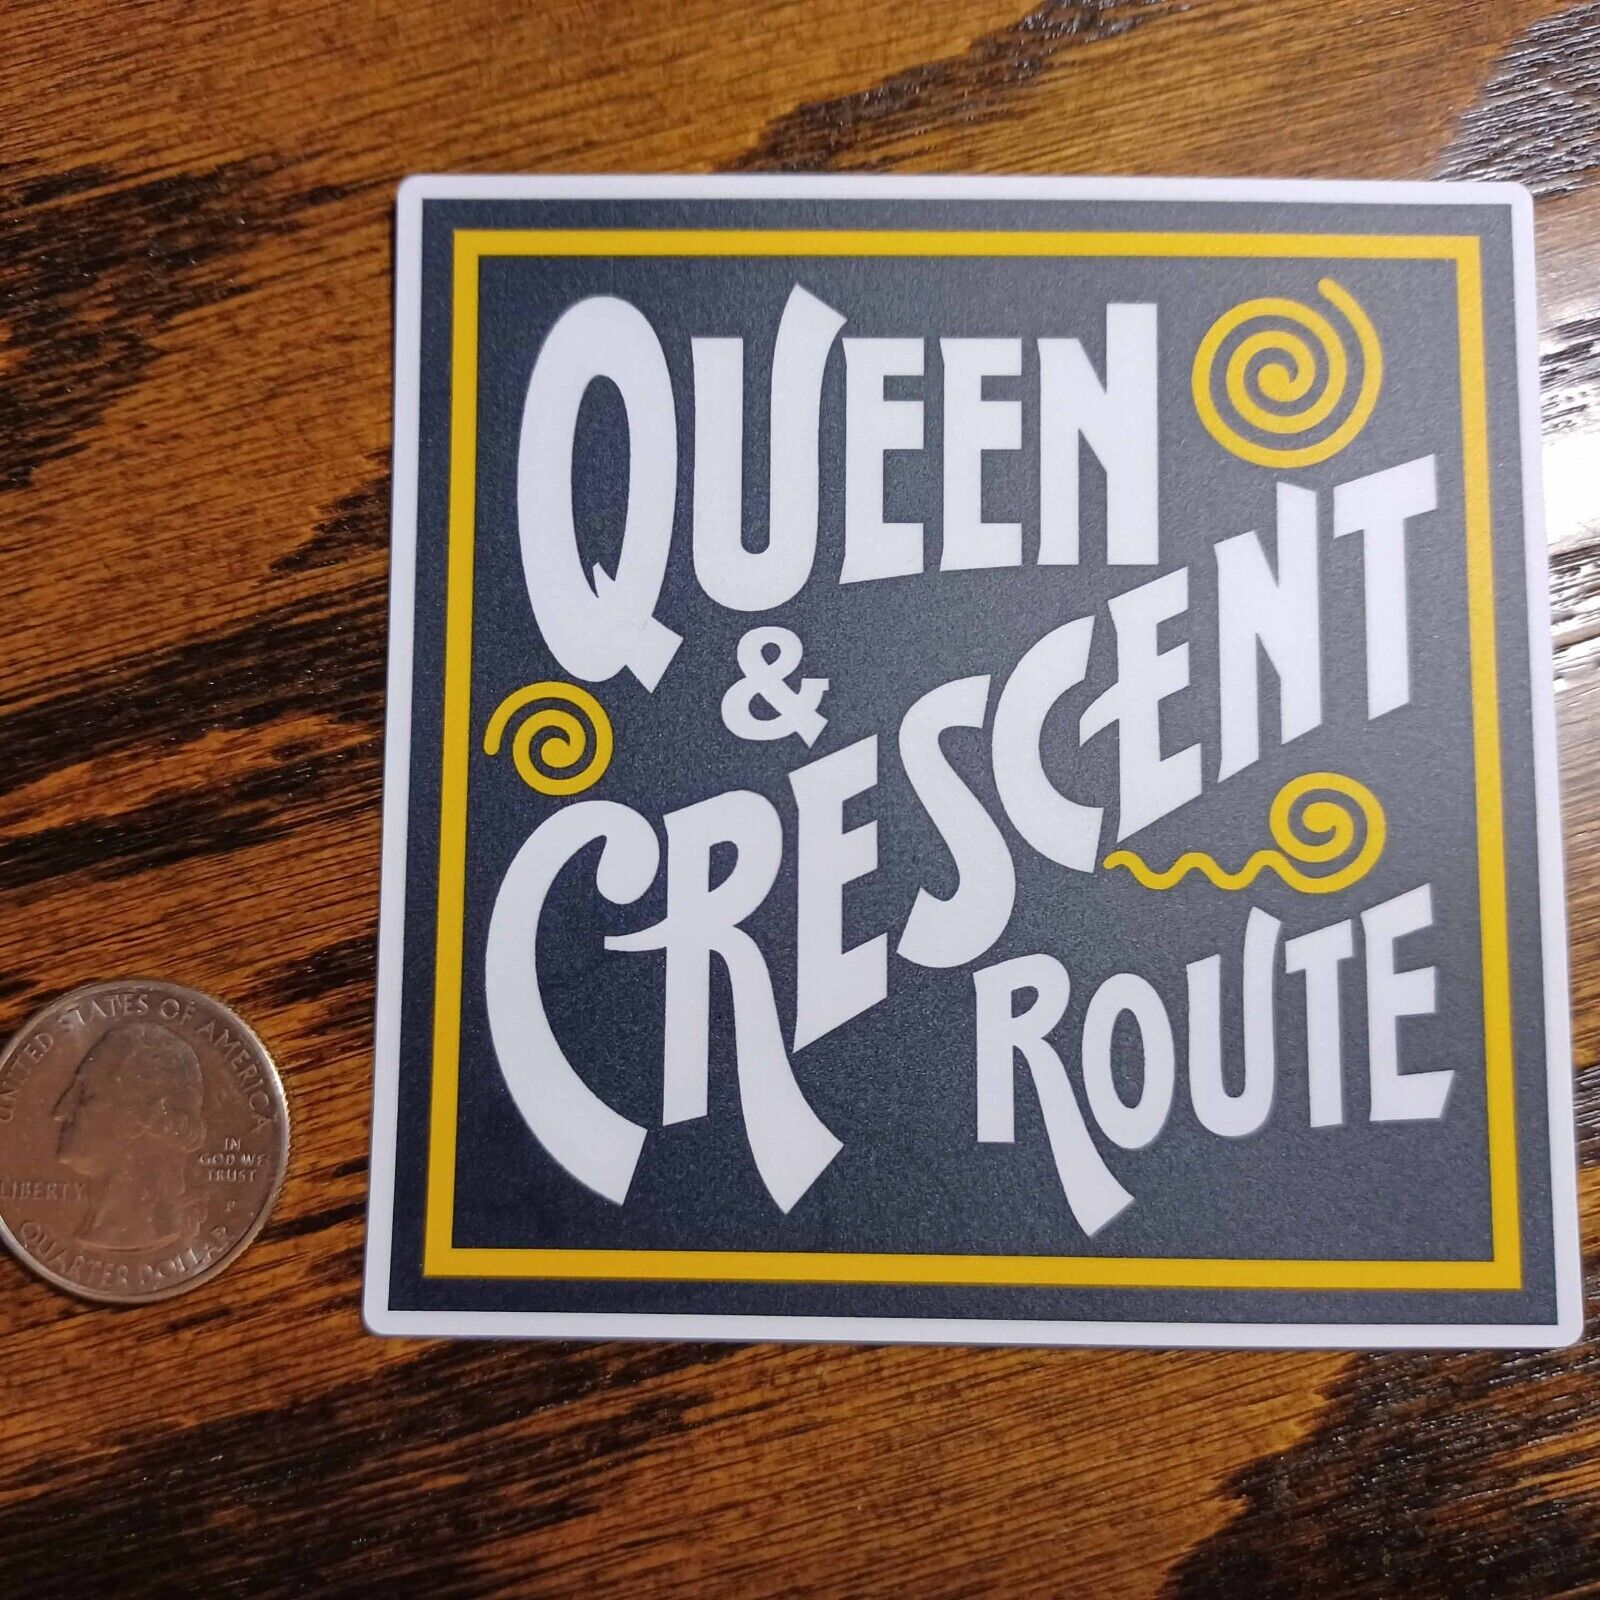 Queen & Crescent Route laminated die-cut vinyl sticker